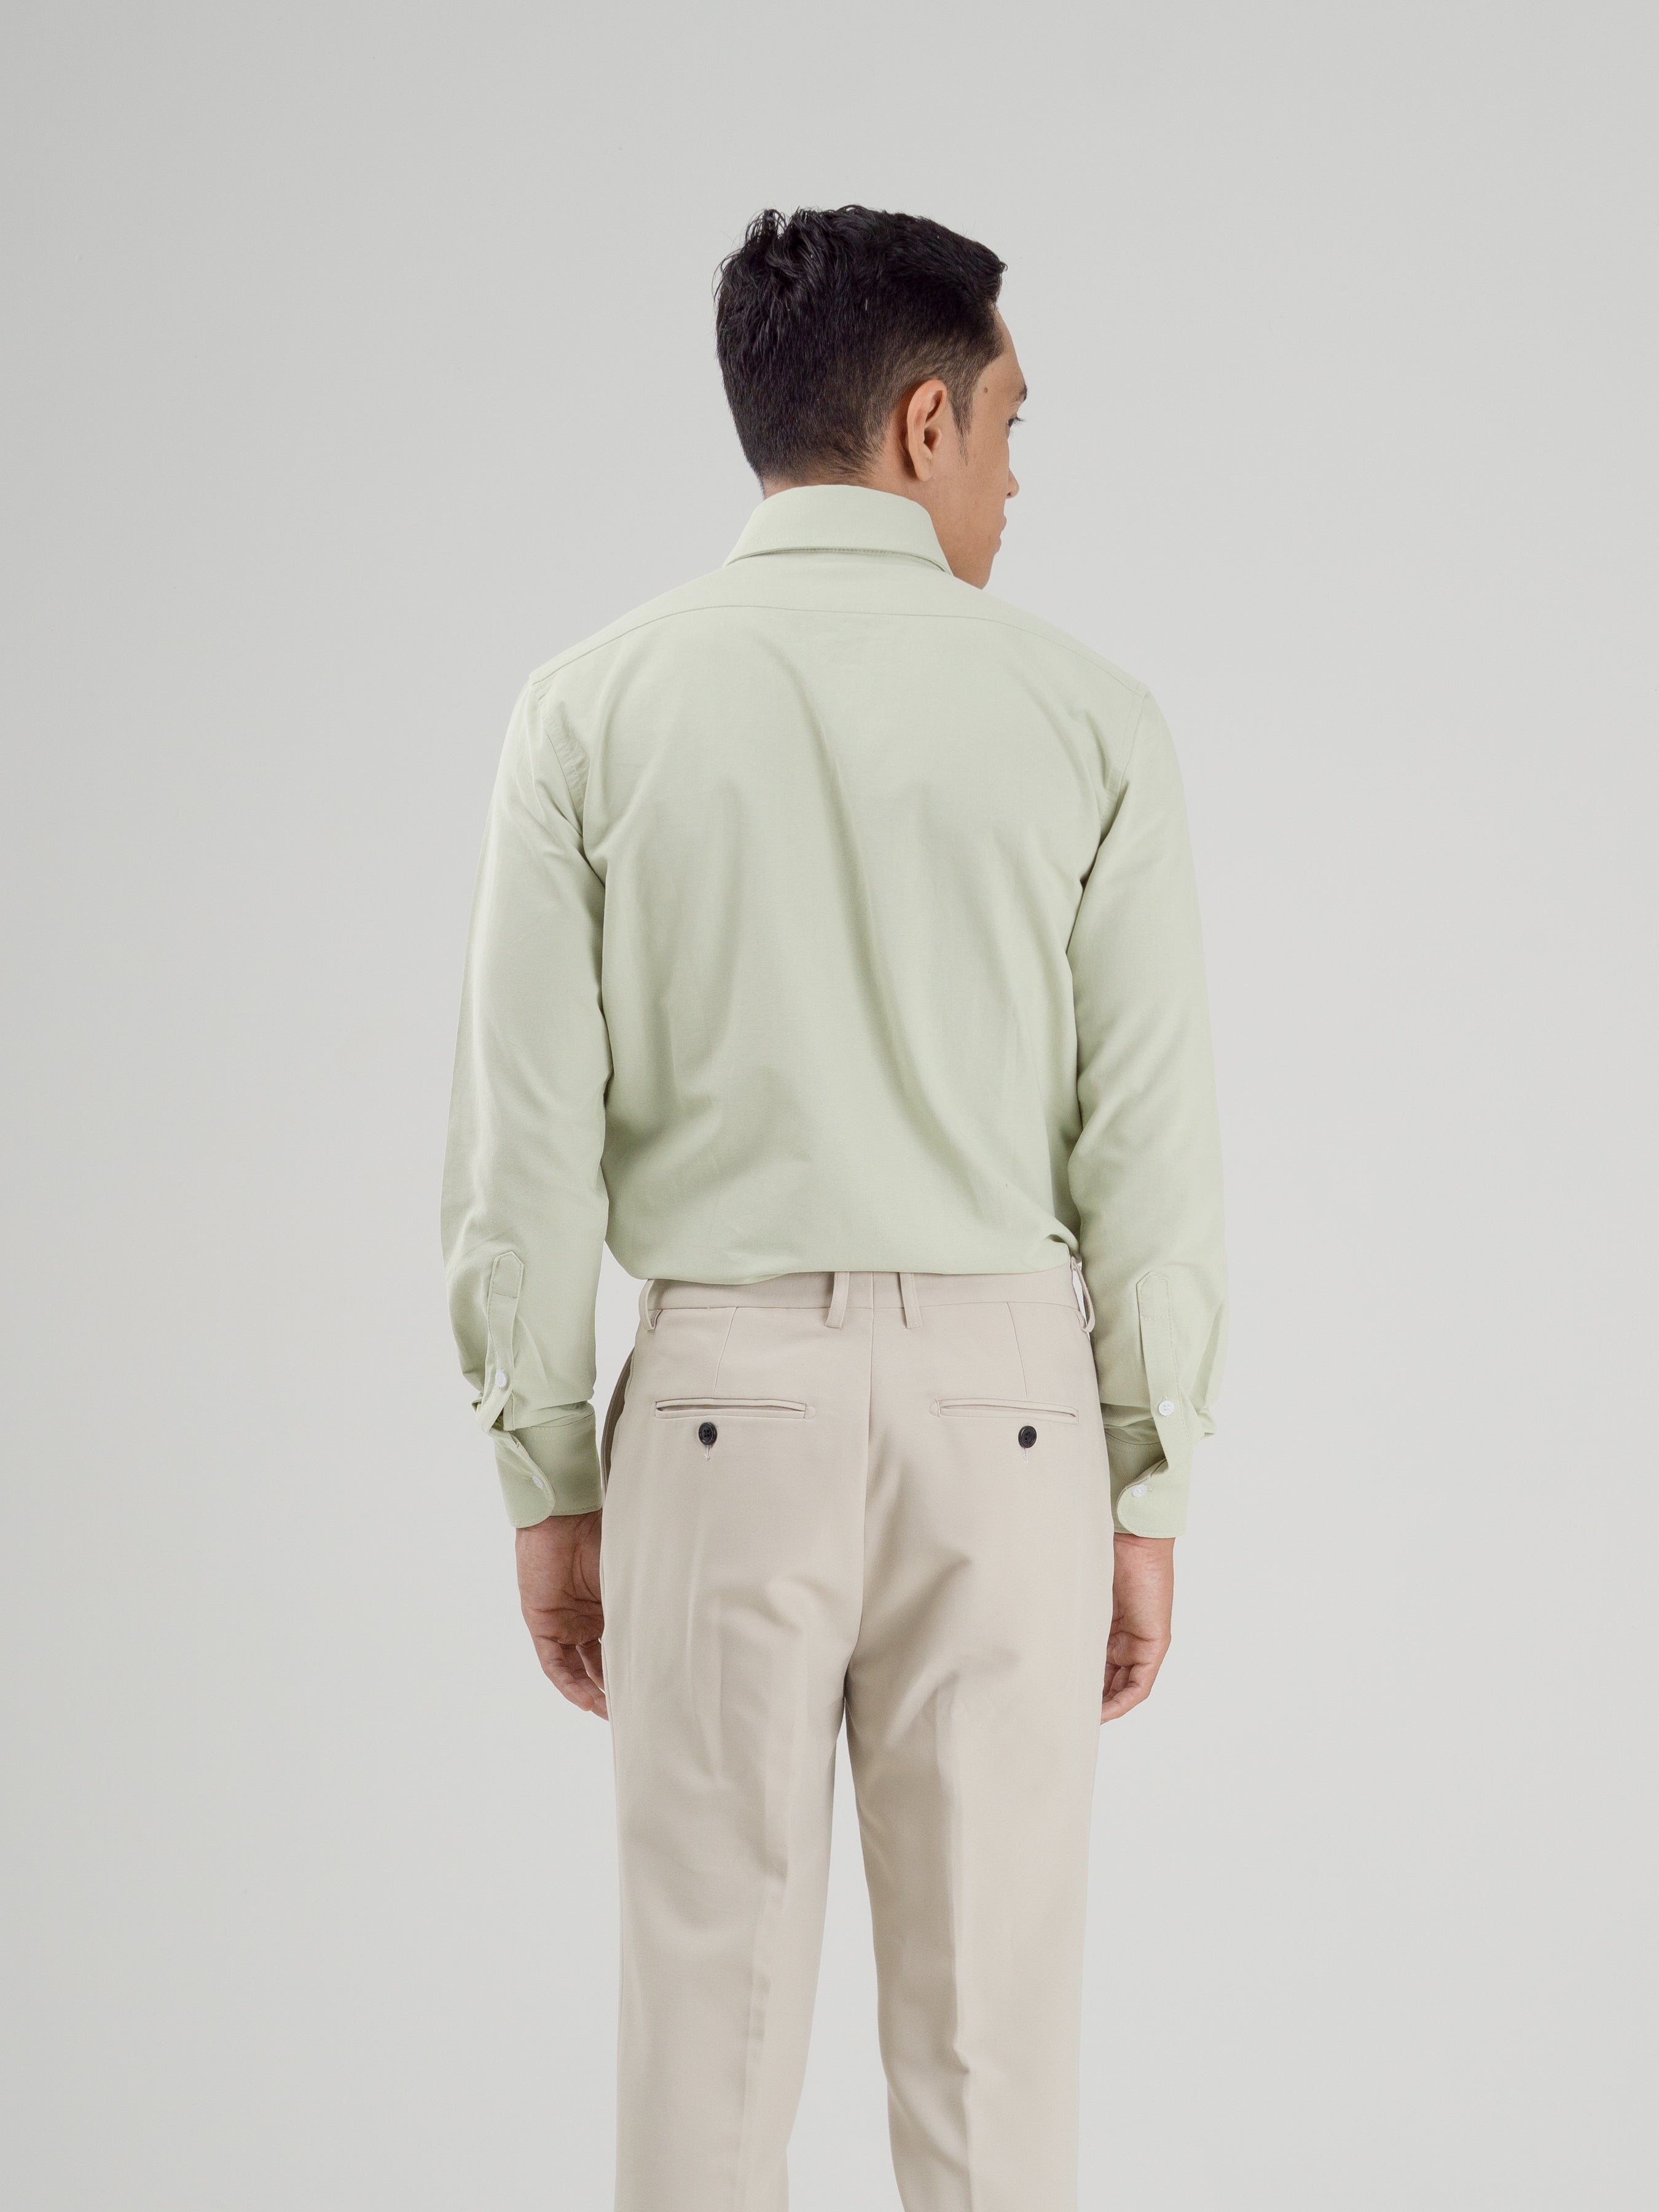 Formal Shirt - Mint Green Oxford Button-Down Collar